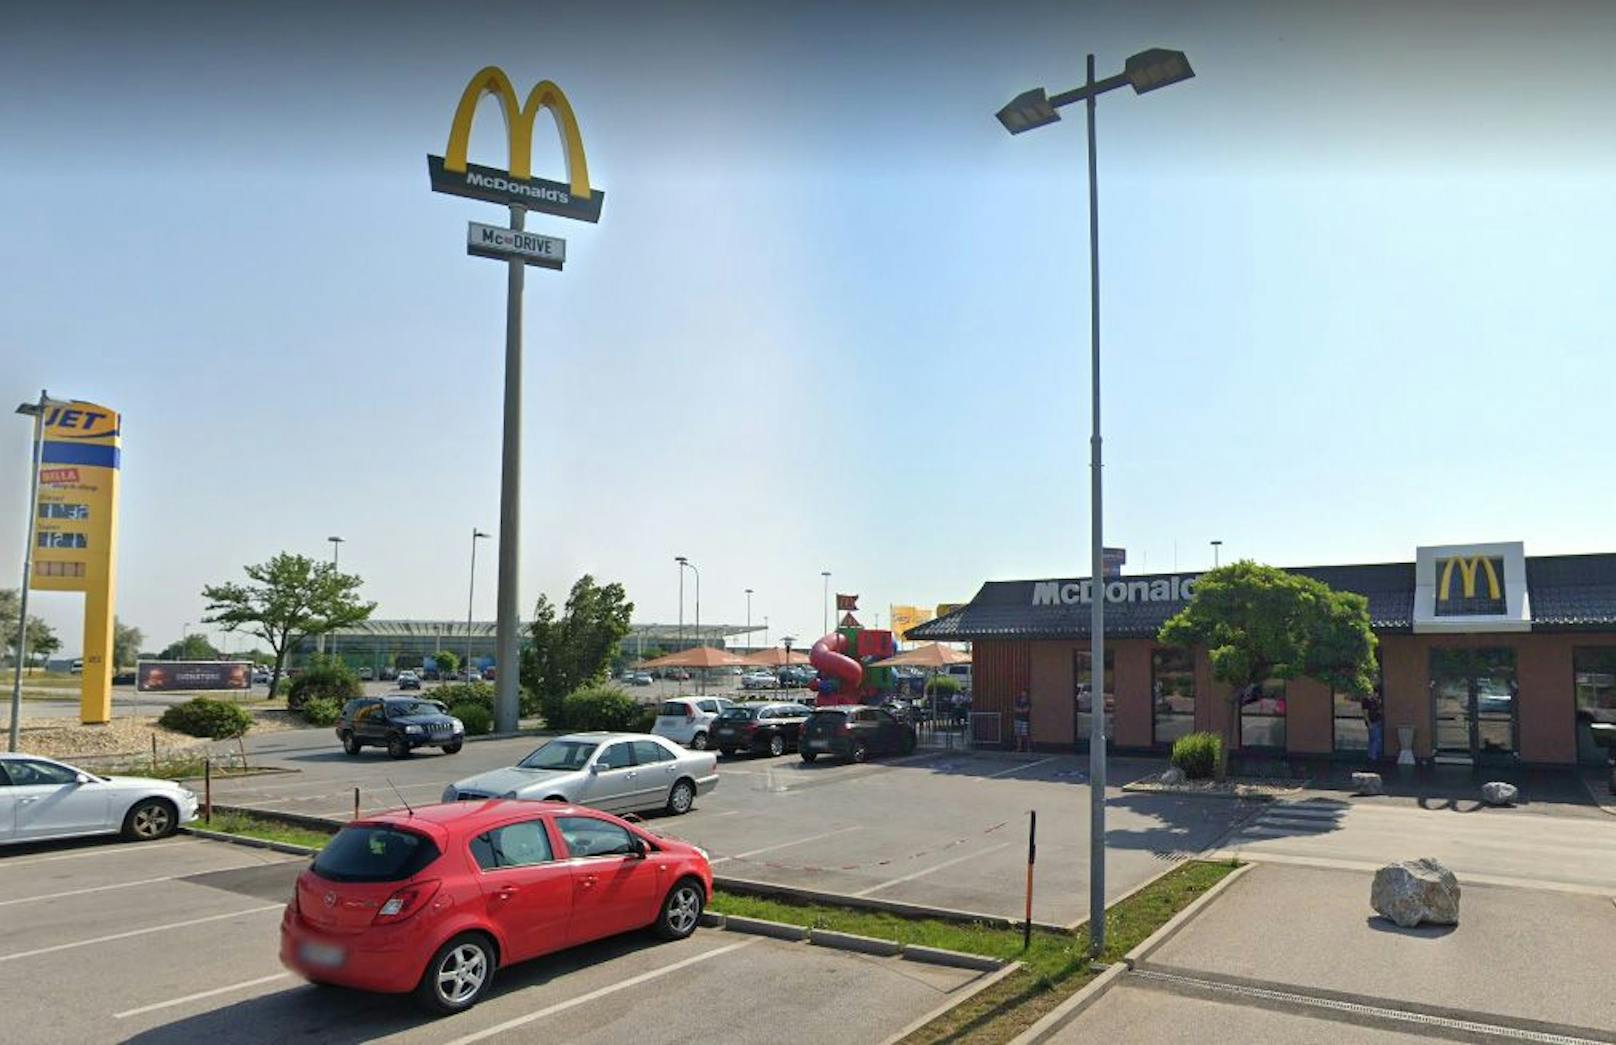 Bei McDonald's in Neusiedl am See ist die maximale Parkdauer anderthalb Stunden.